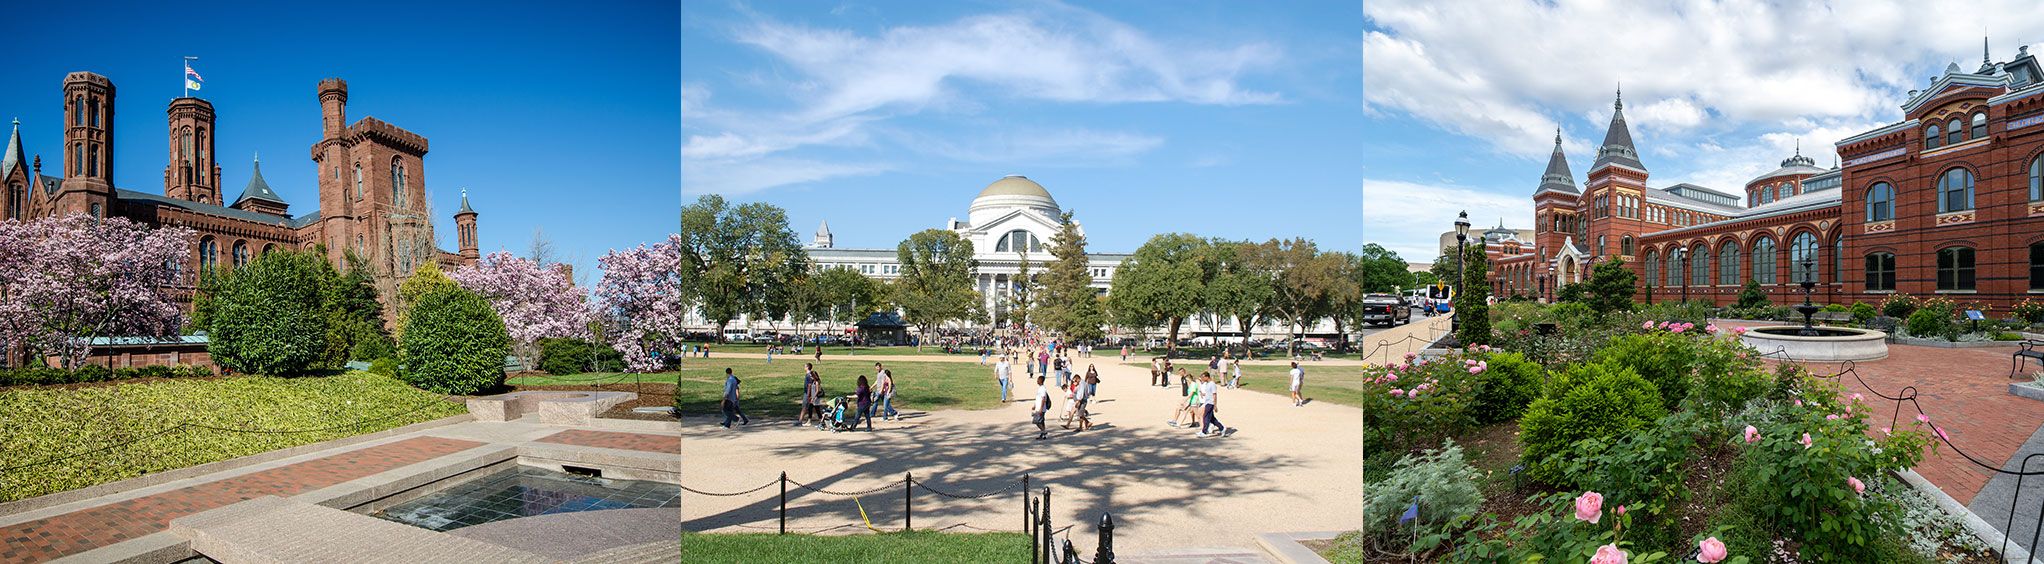 Smithsonian National Mall Tours in Washington, DC